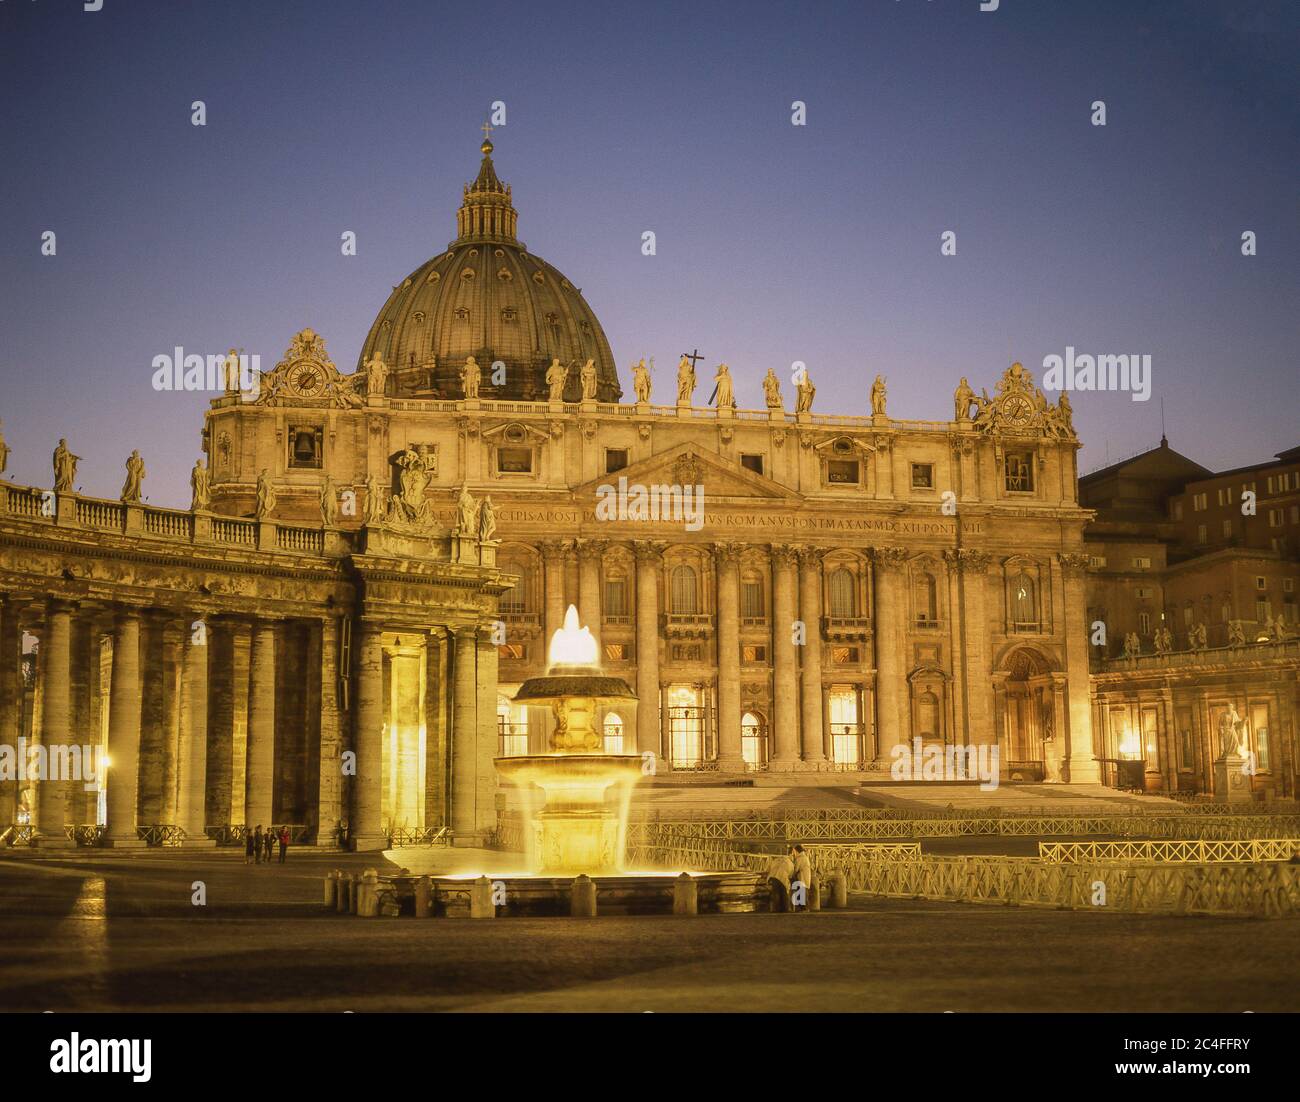 Basilikapapelle Di San Pietro In Vaticano Stockfotos Und Bilder Kaufen Alamy